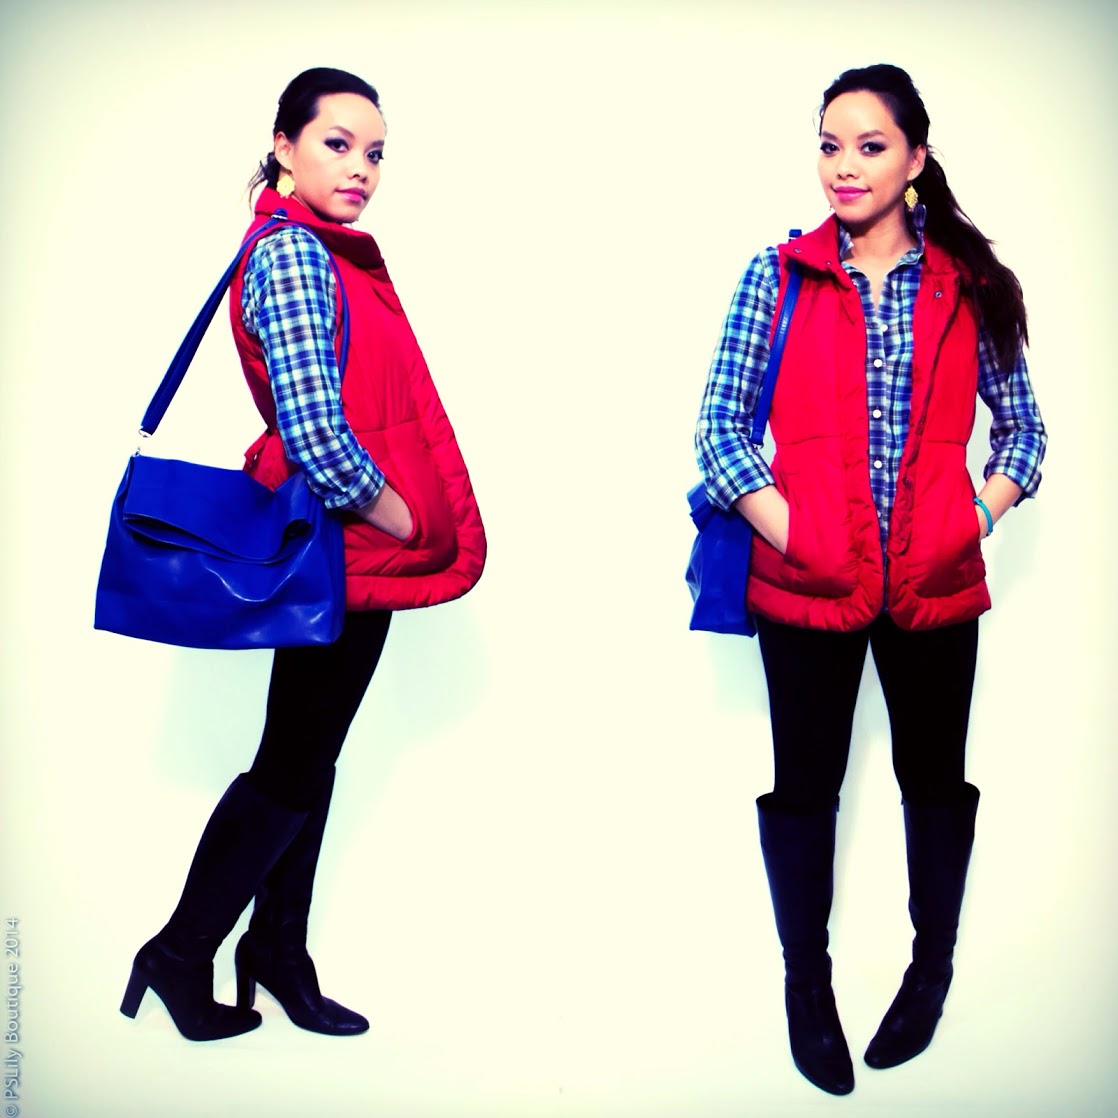 instagram-pslilyboutique-los-angeles-fashion-blogger